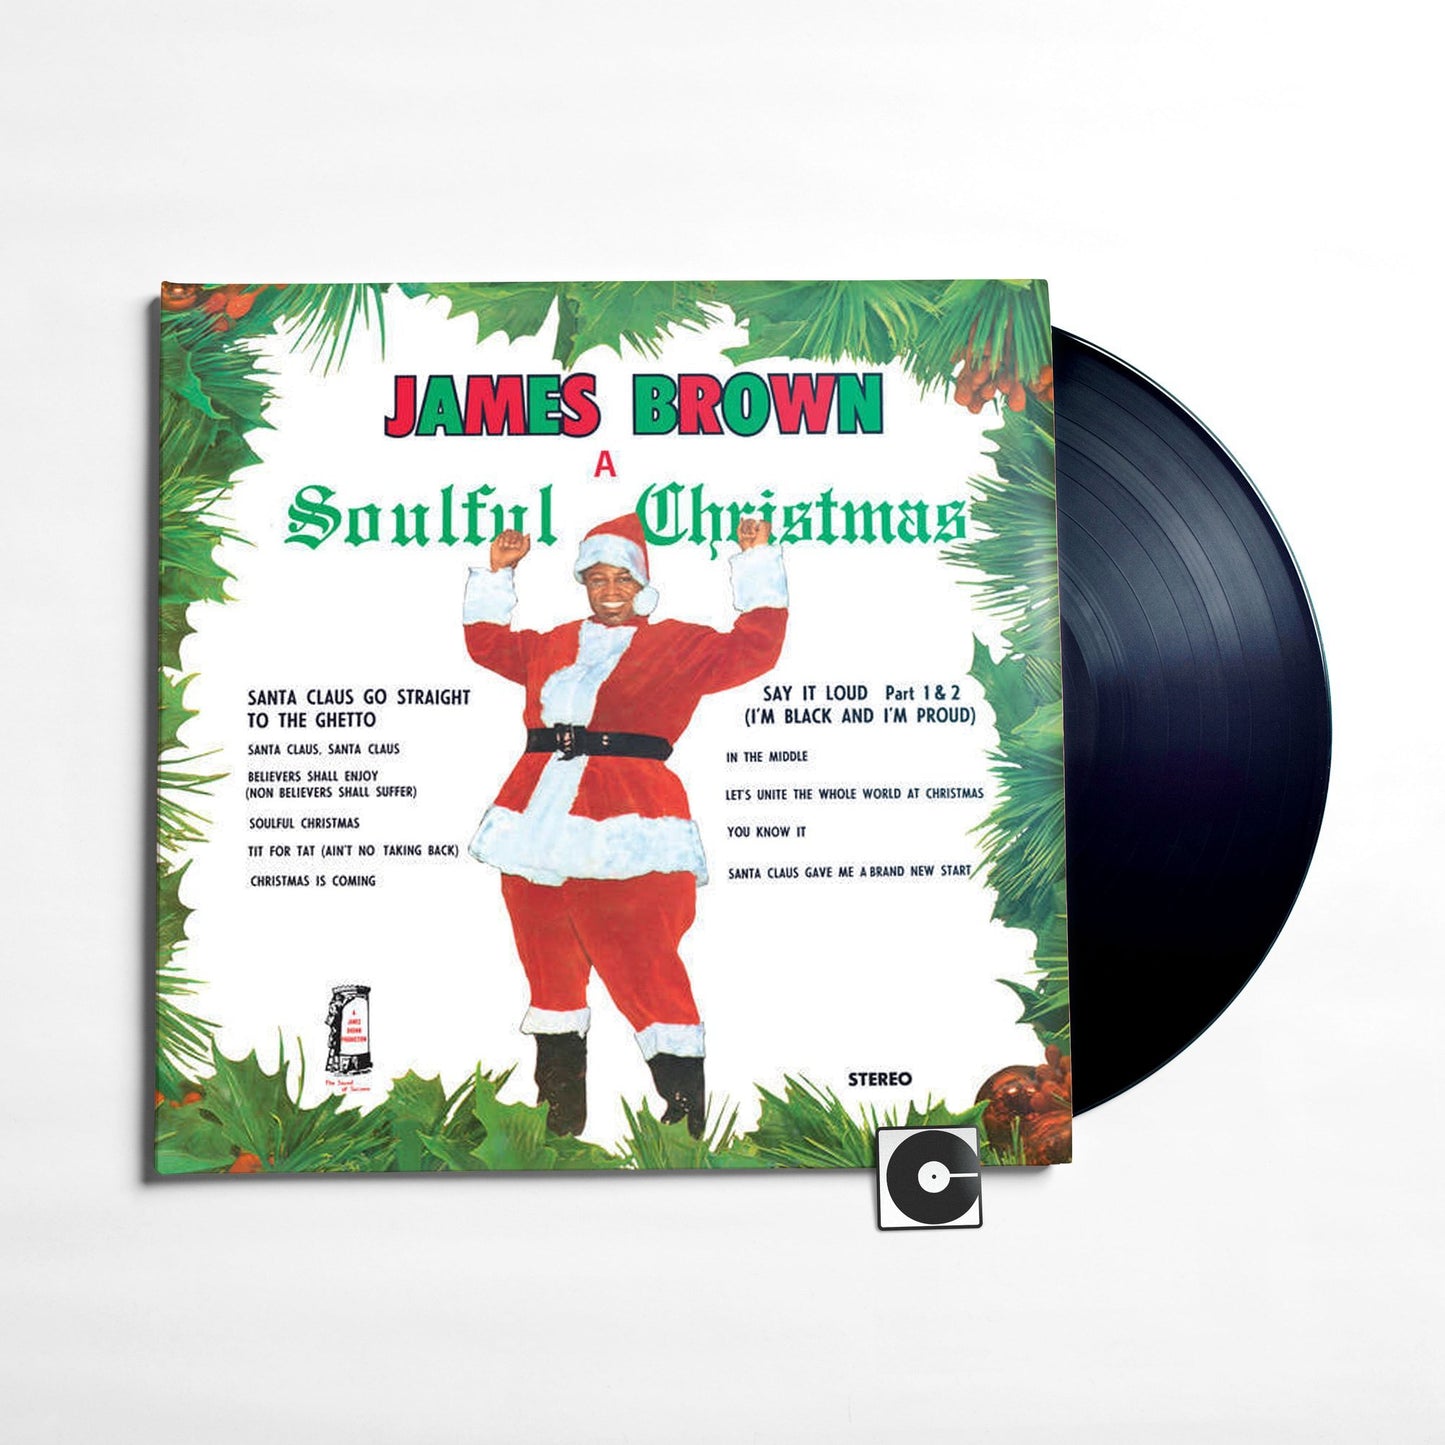 James Brown - "A Soulful Christmas"